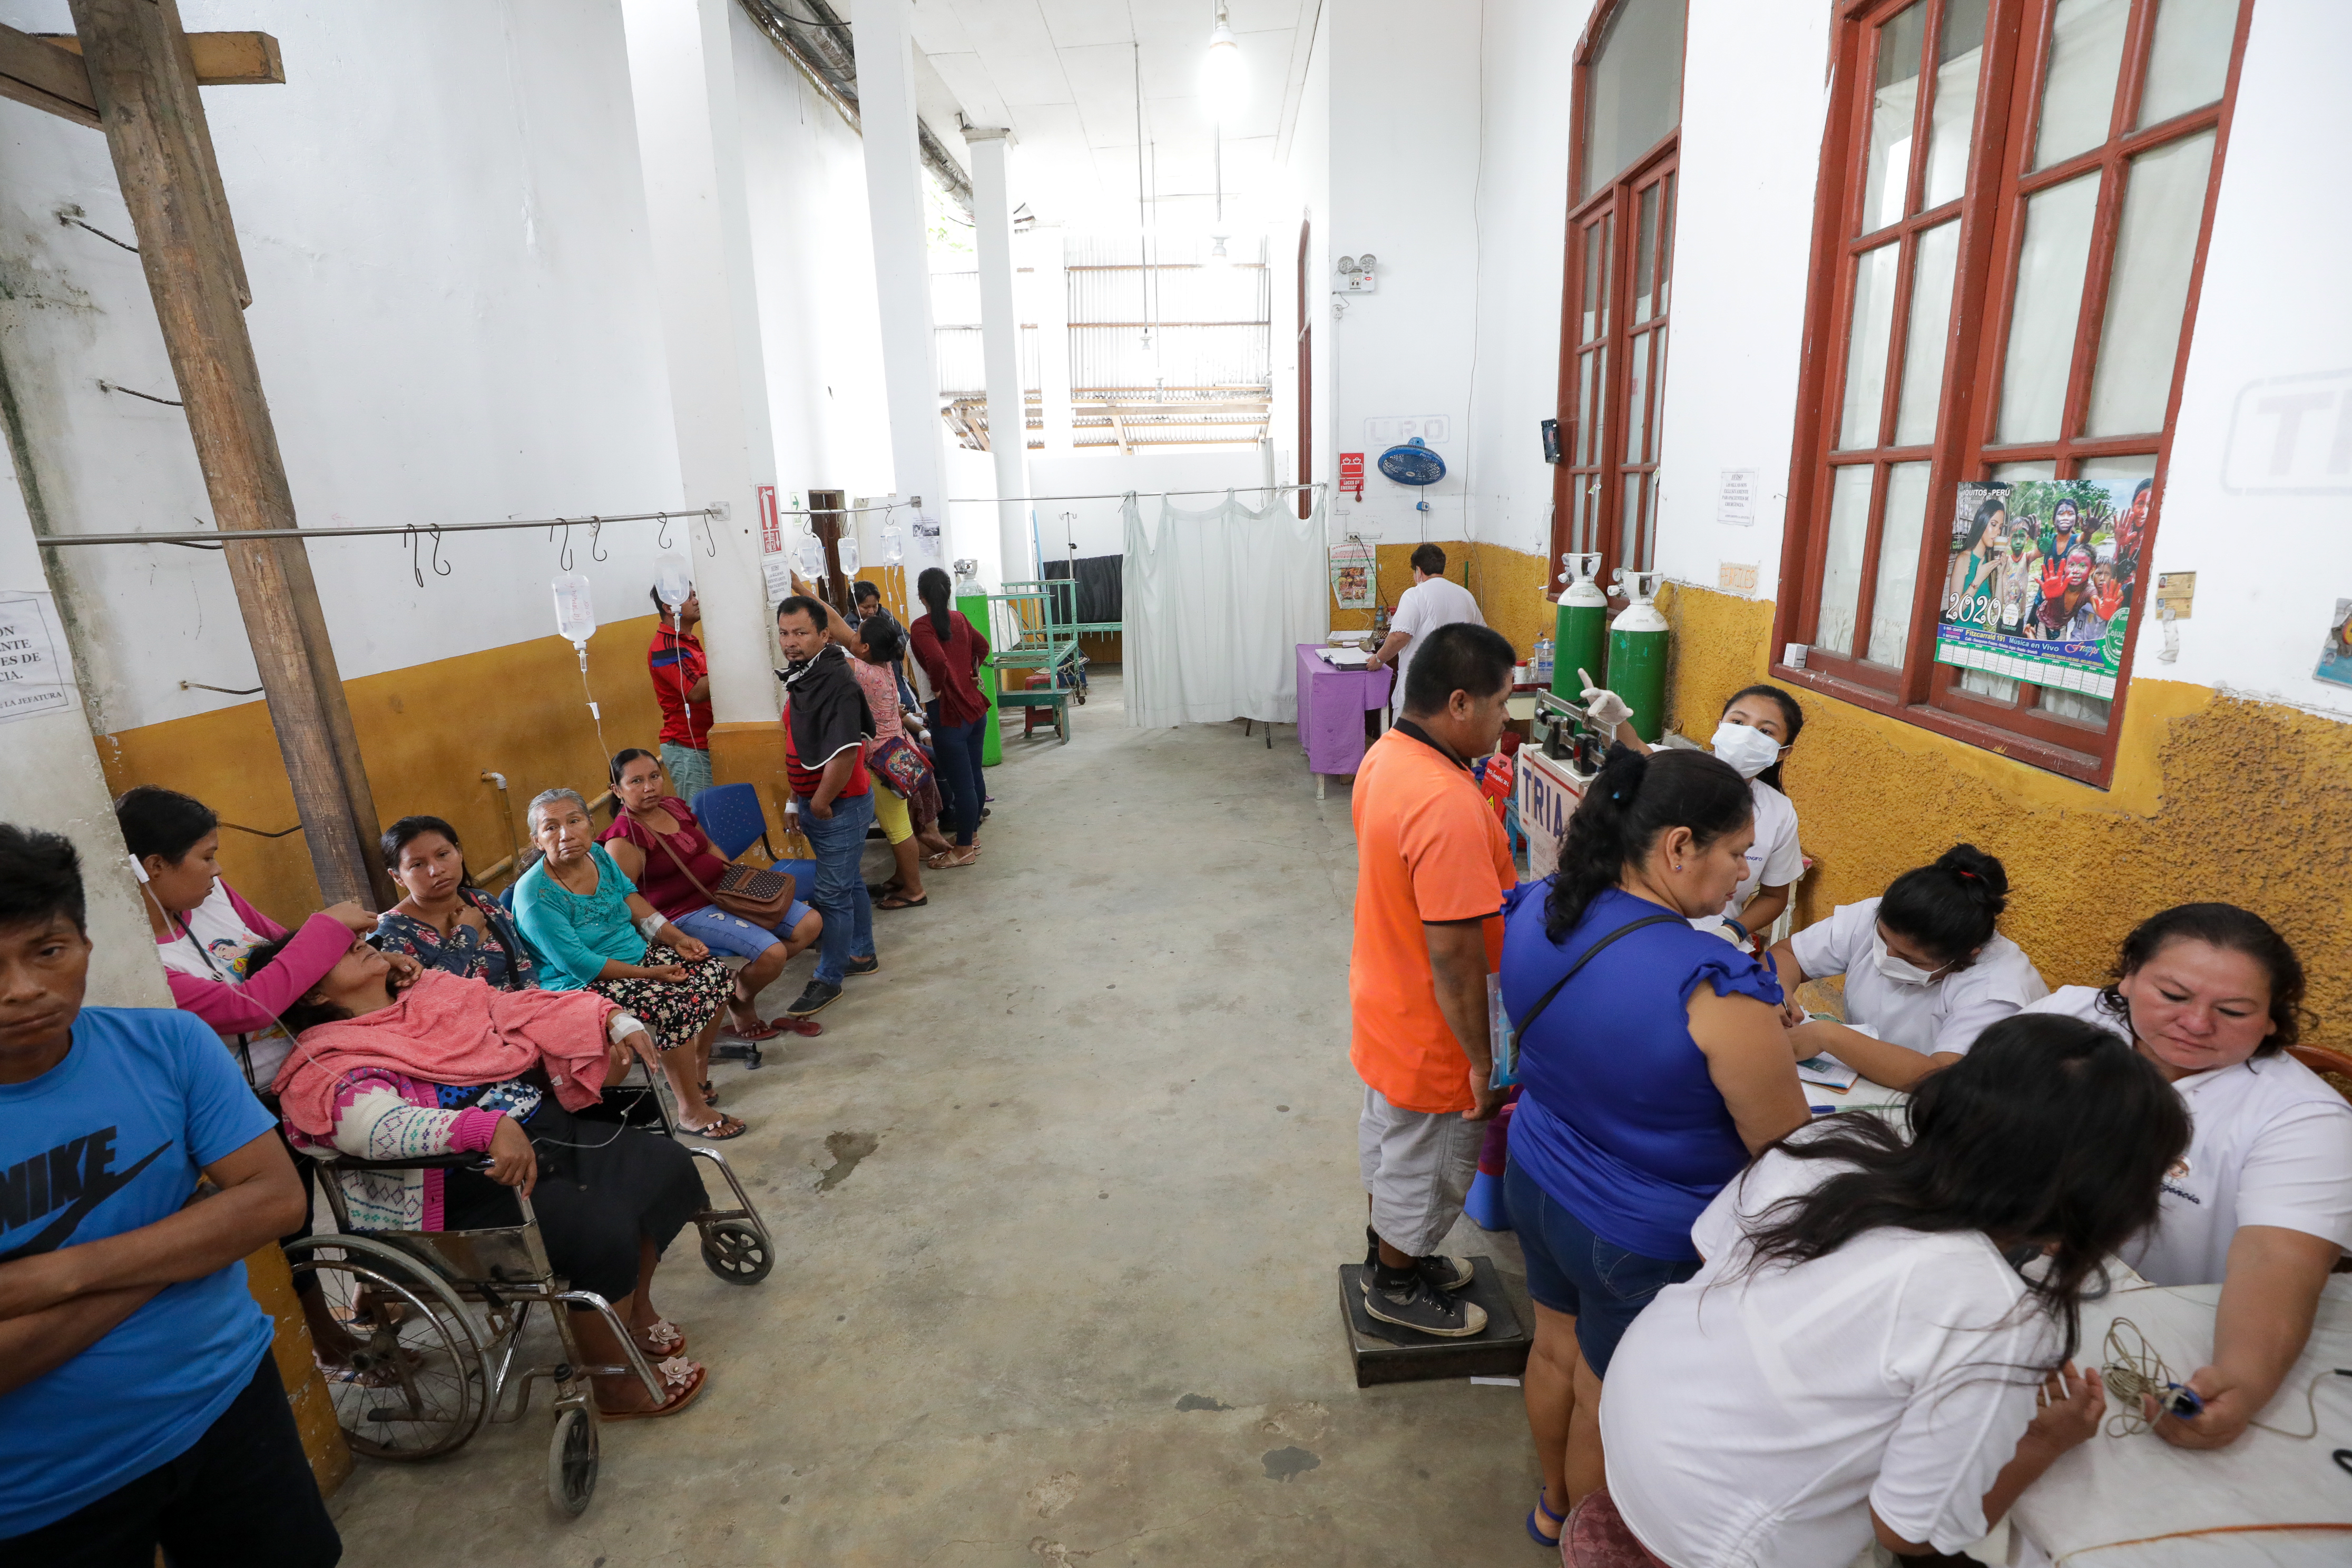 Überfüllte Krankenstation in Iquitos in Peru (Symbolbild). Foto: Foto: Ministerio de la Producción, Public Domain Mark 1.0